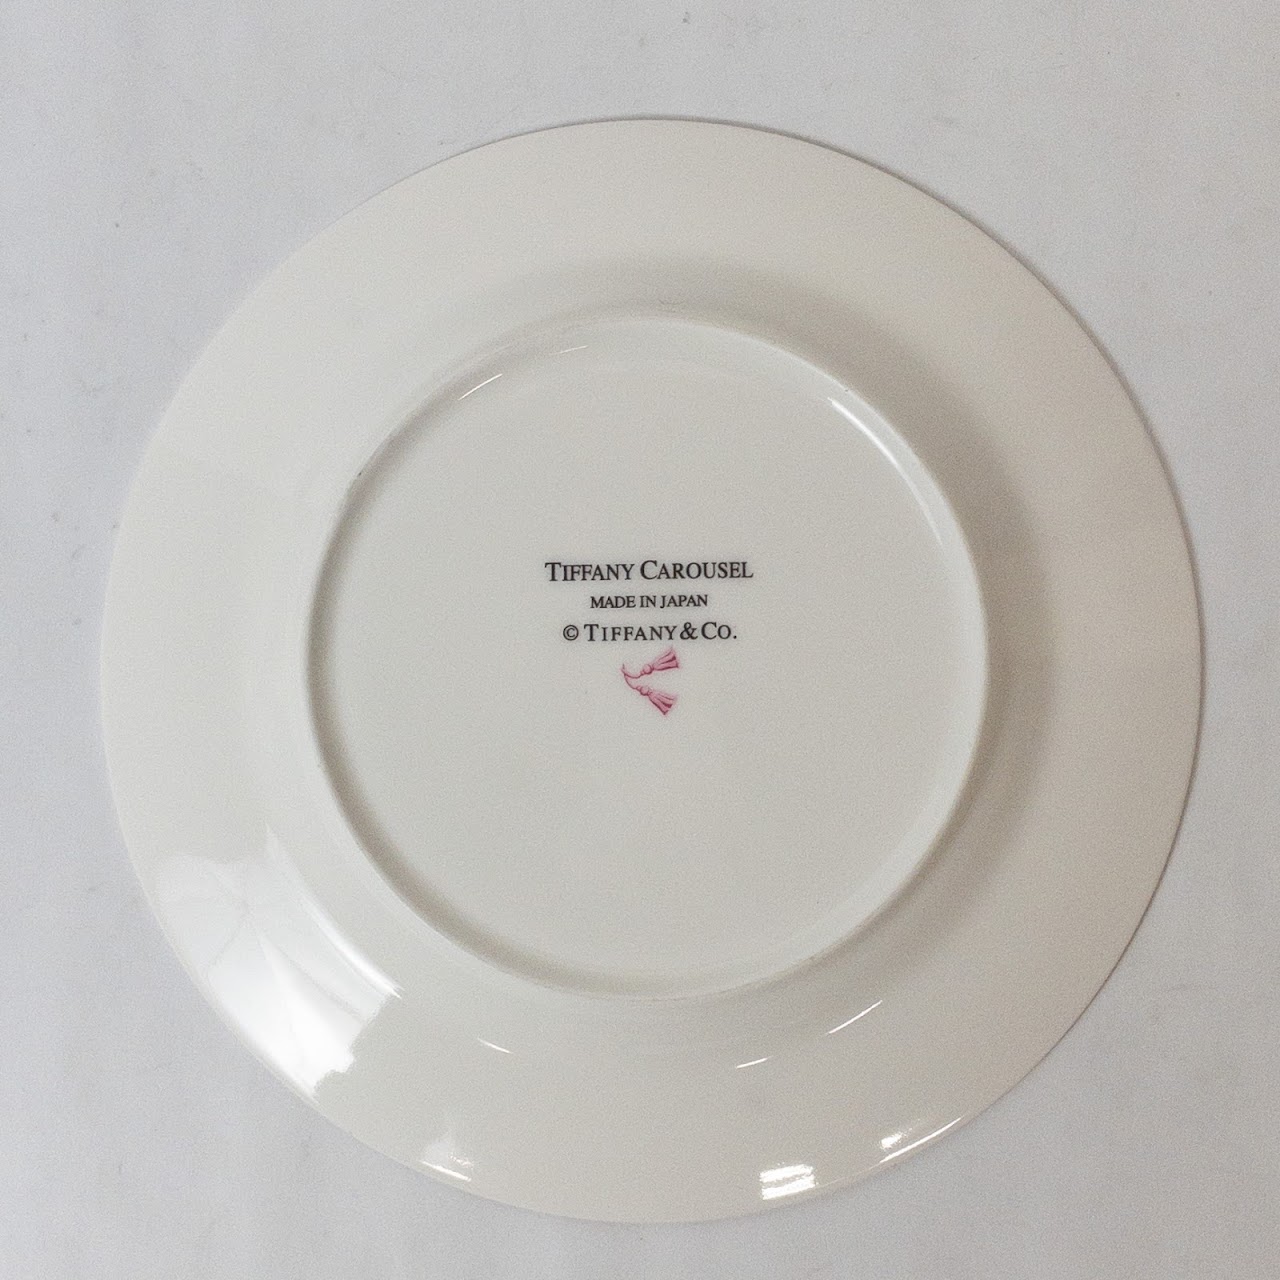 Tiffany & Co. Child's Dinnerware Set